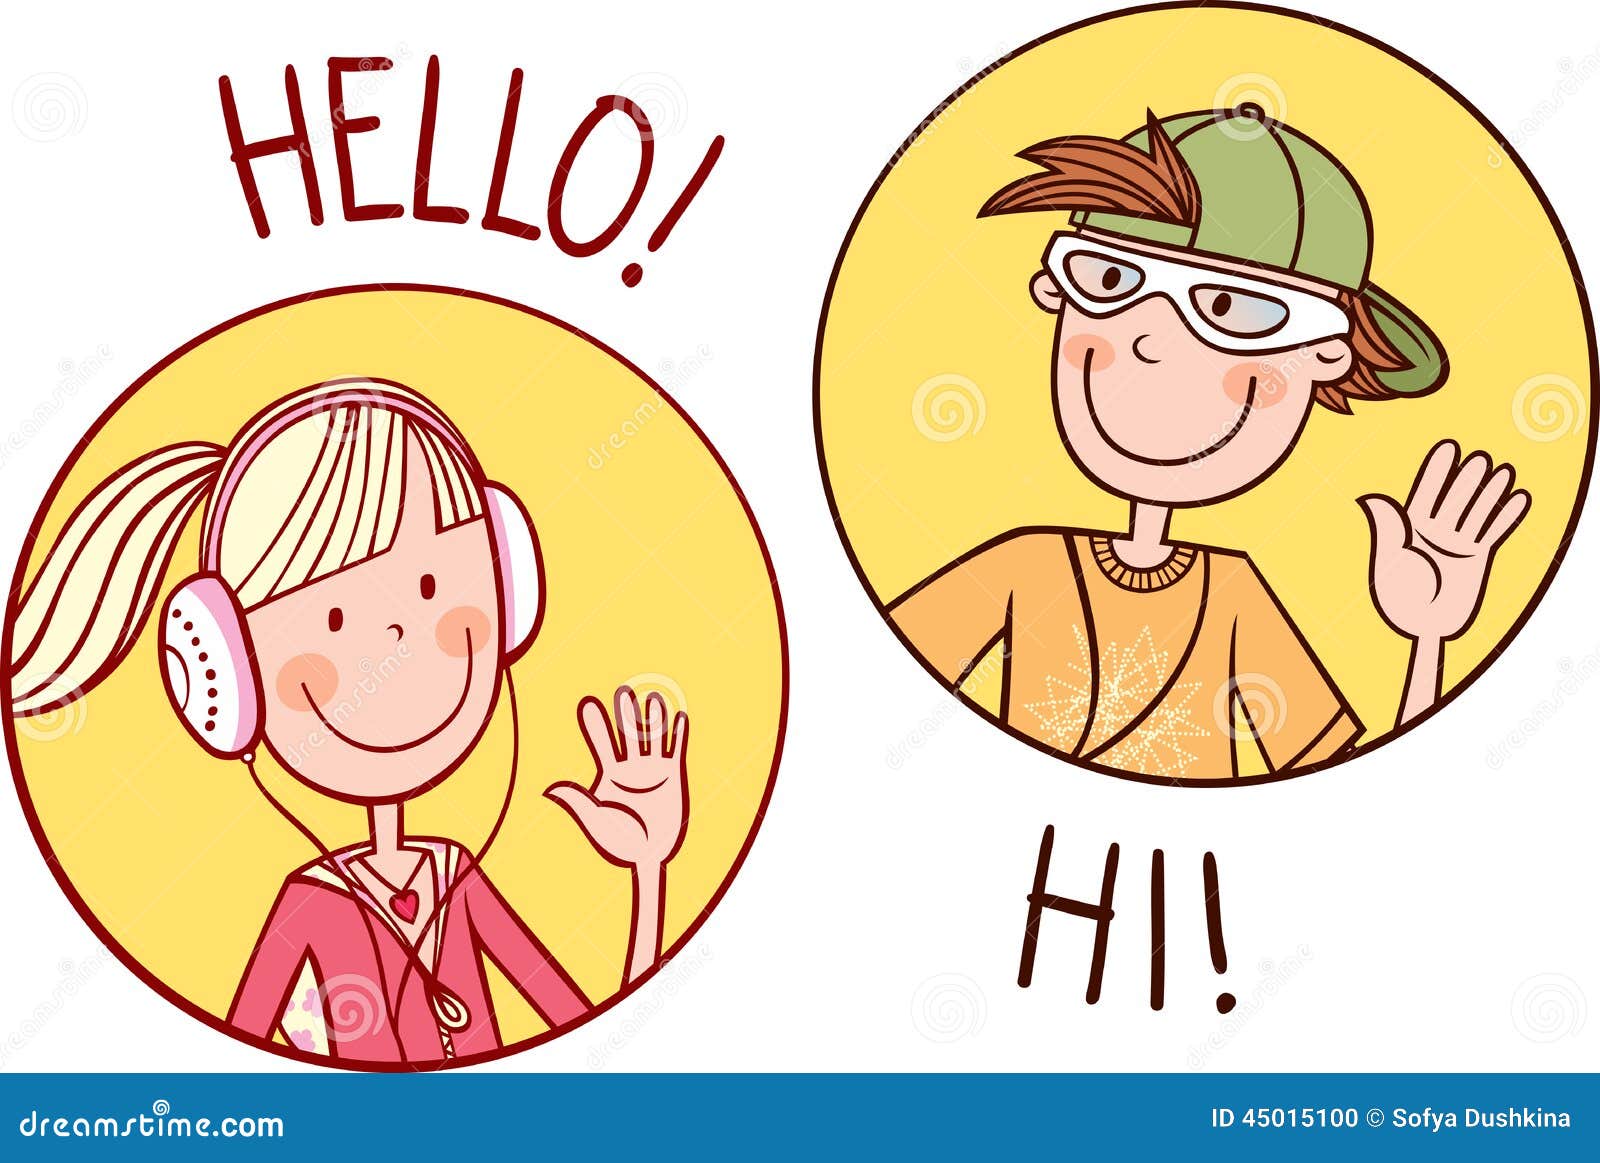 Illustration of hello, communication, people - 45015100.